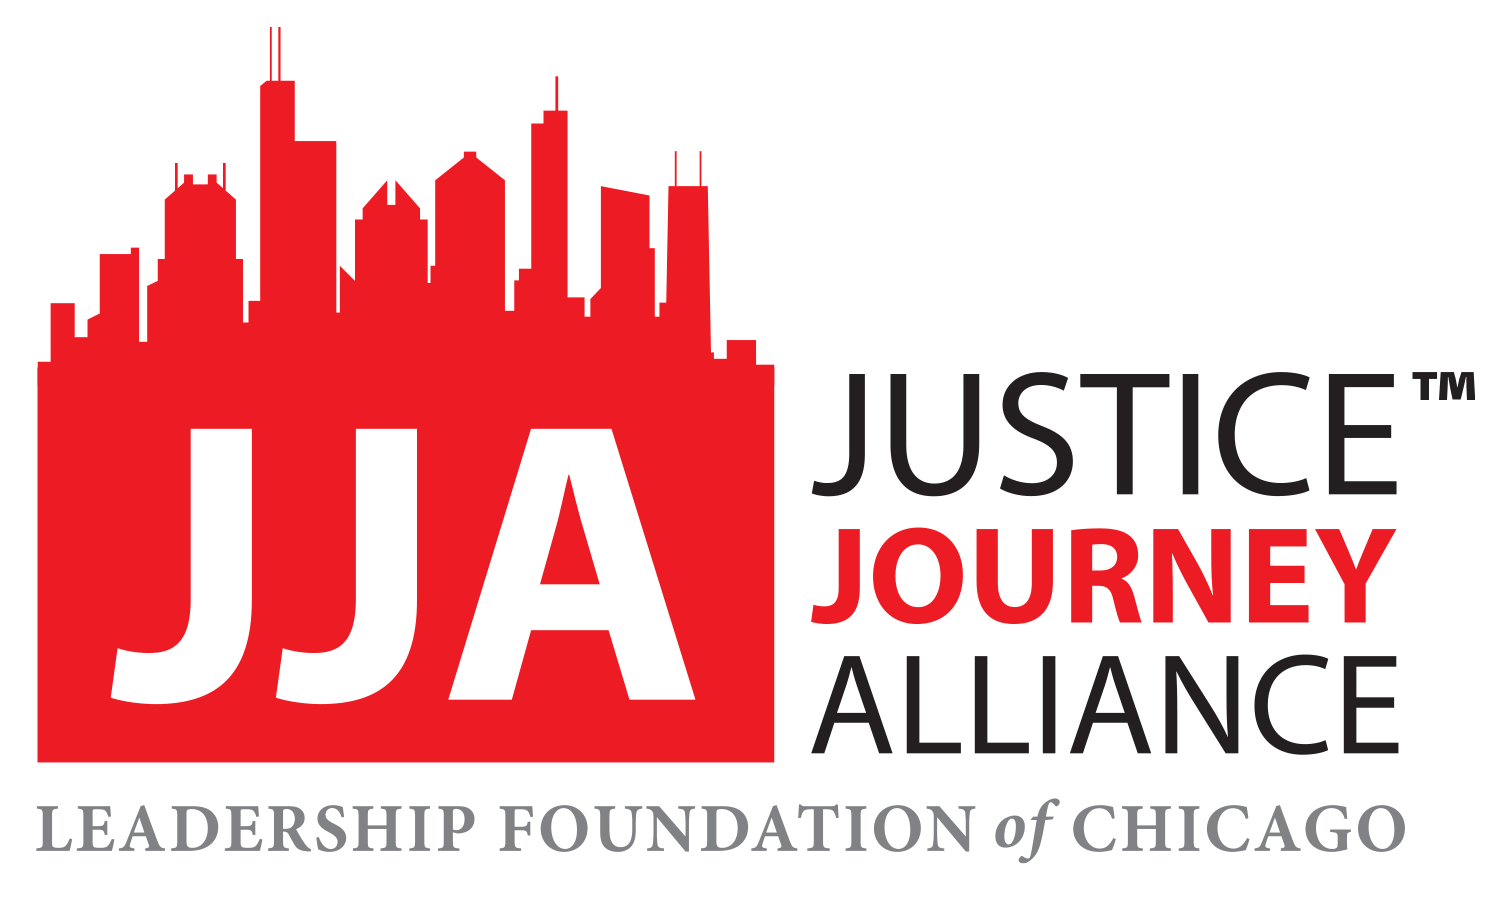 Justice Journey Alliance™